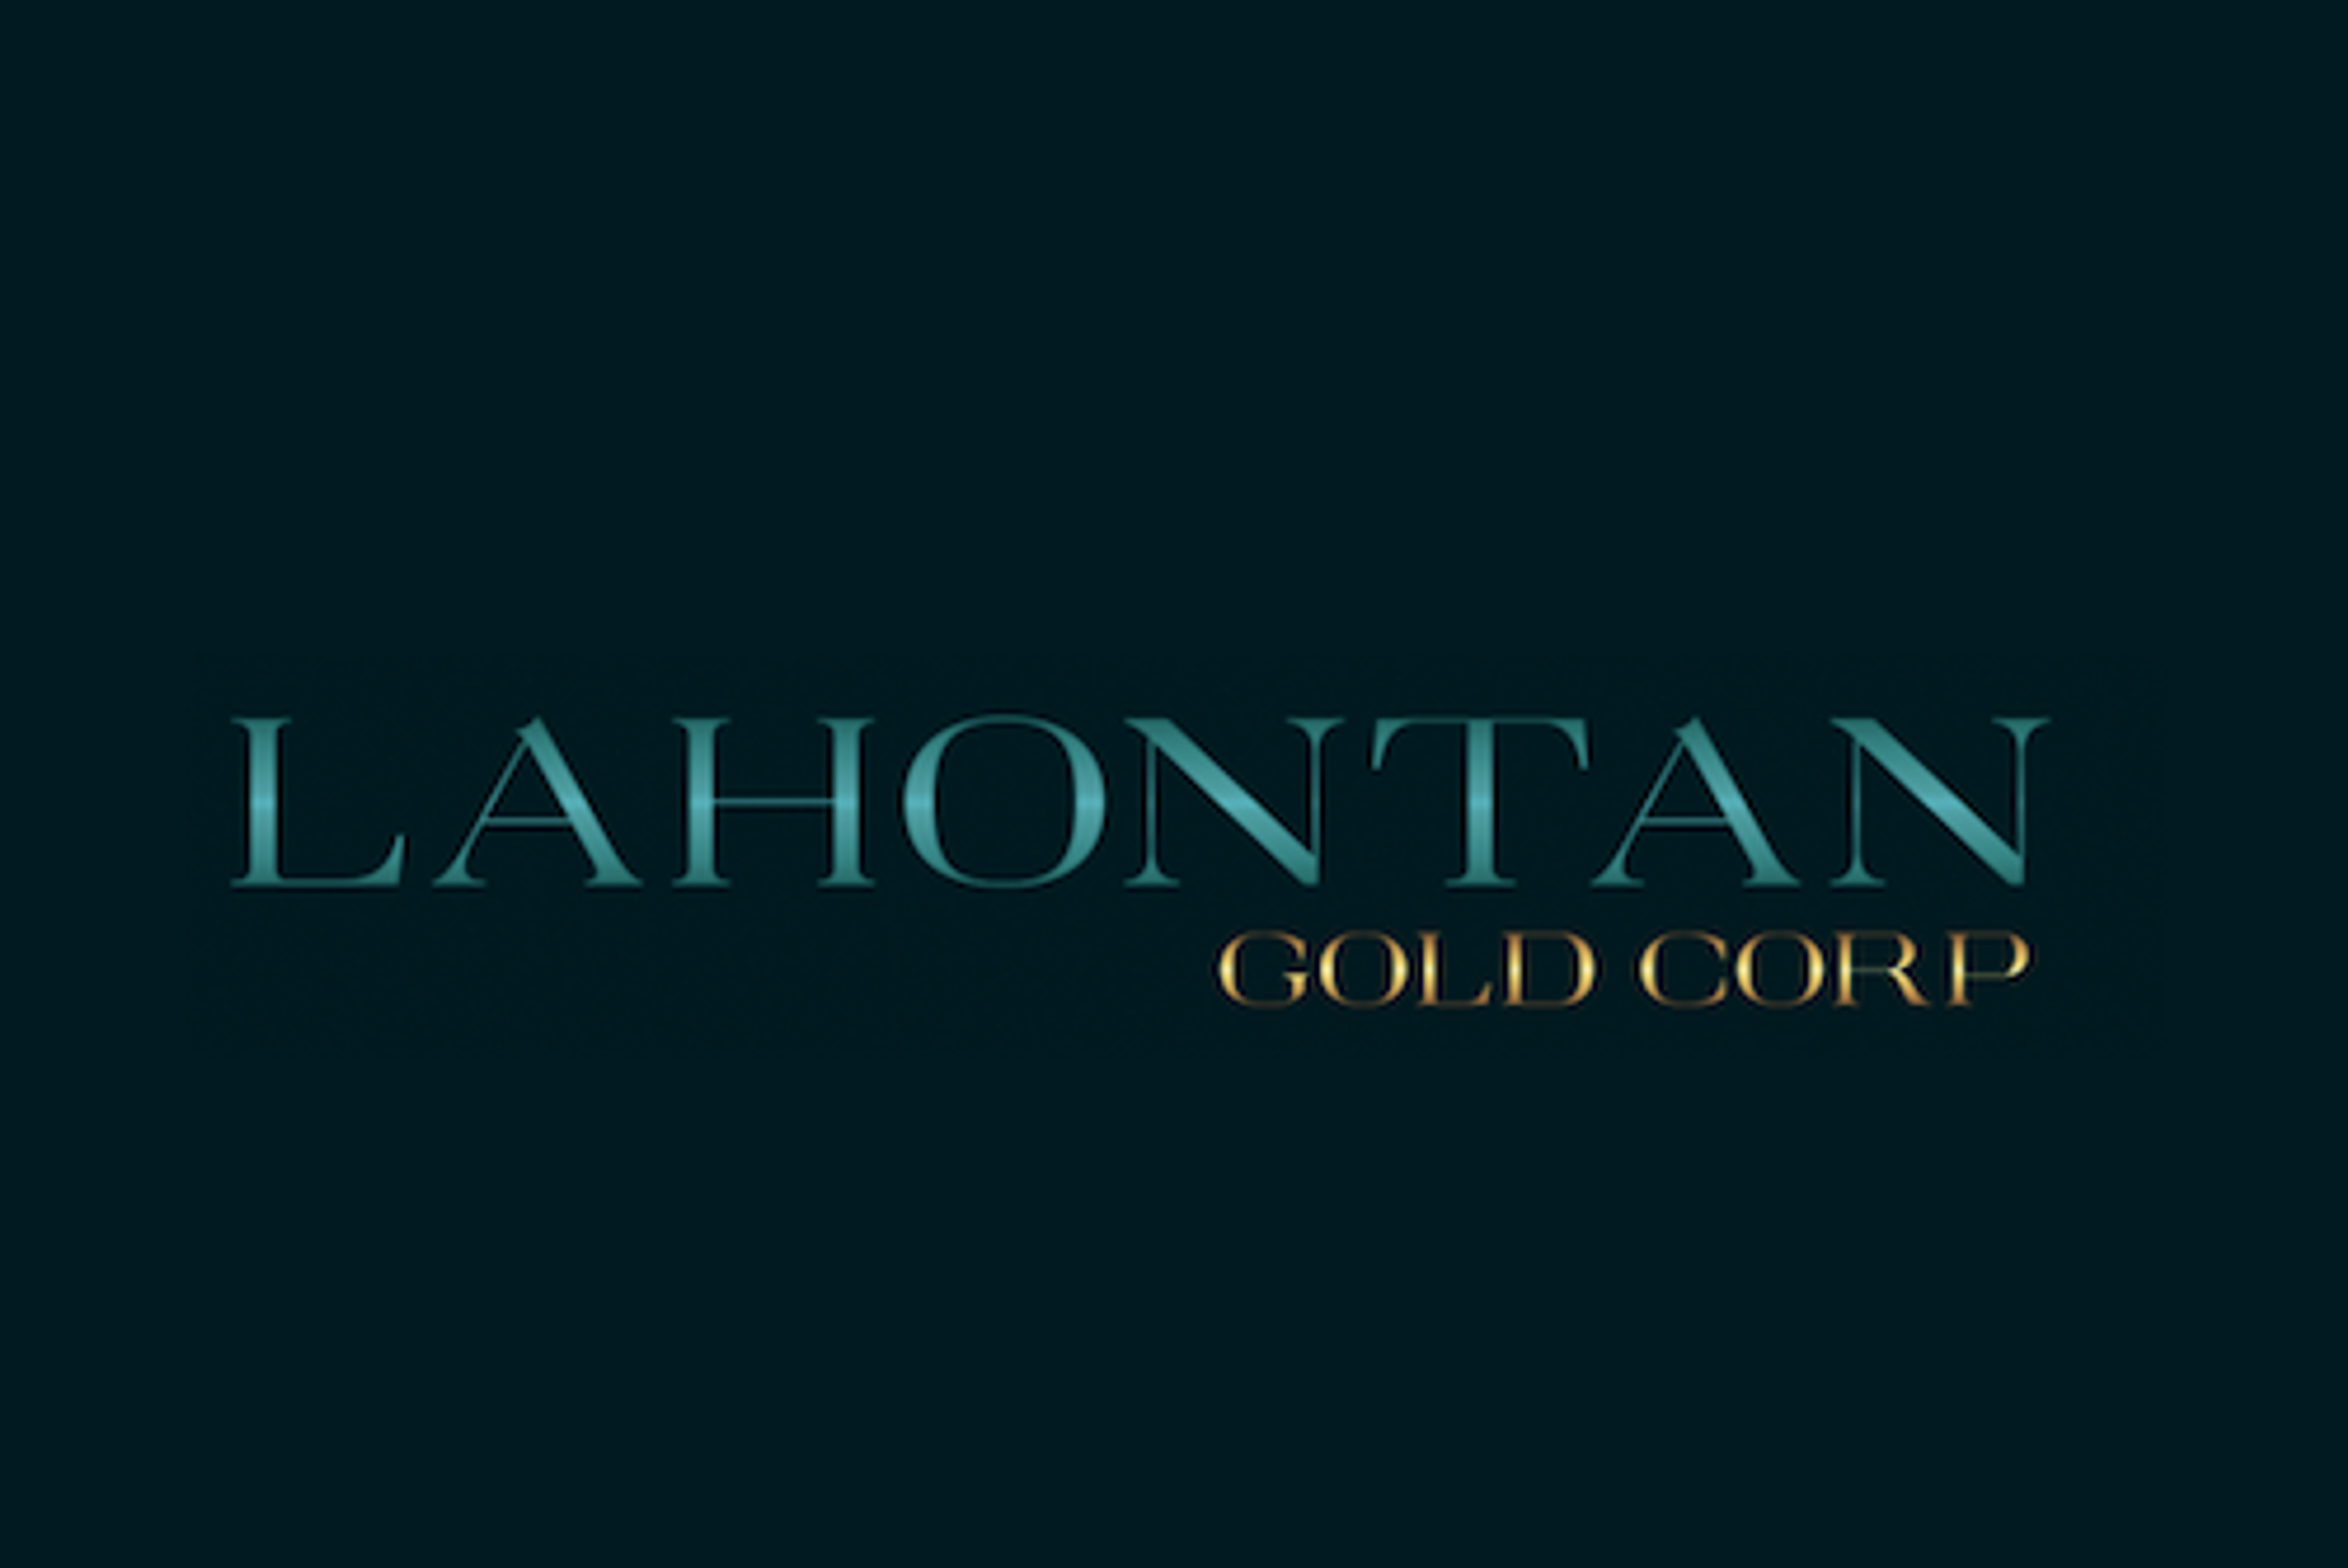  Lahontan Gold Corp.